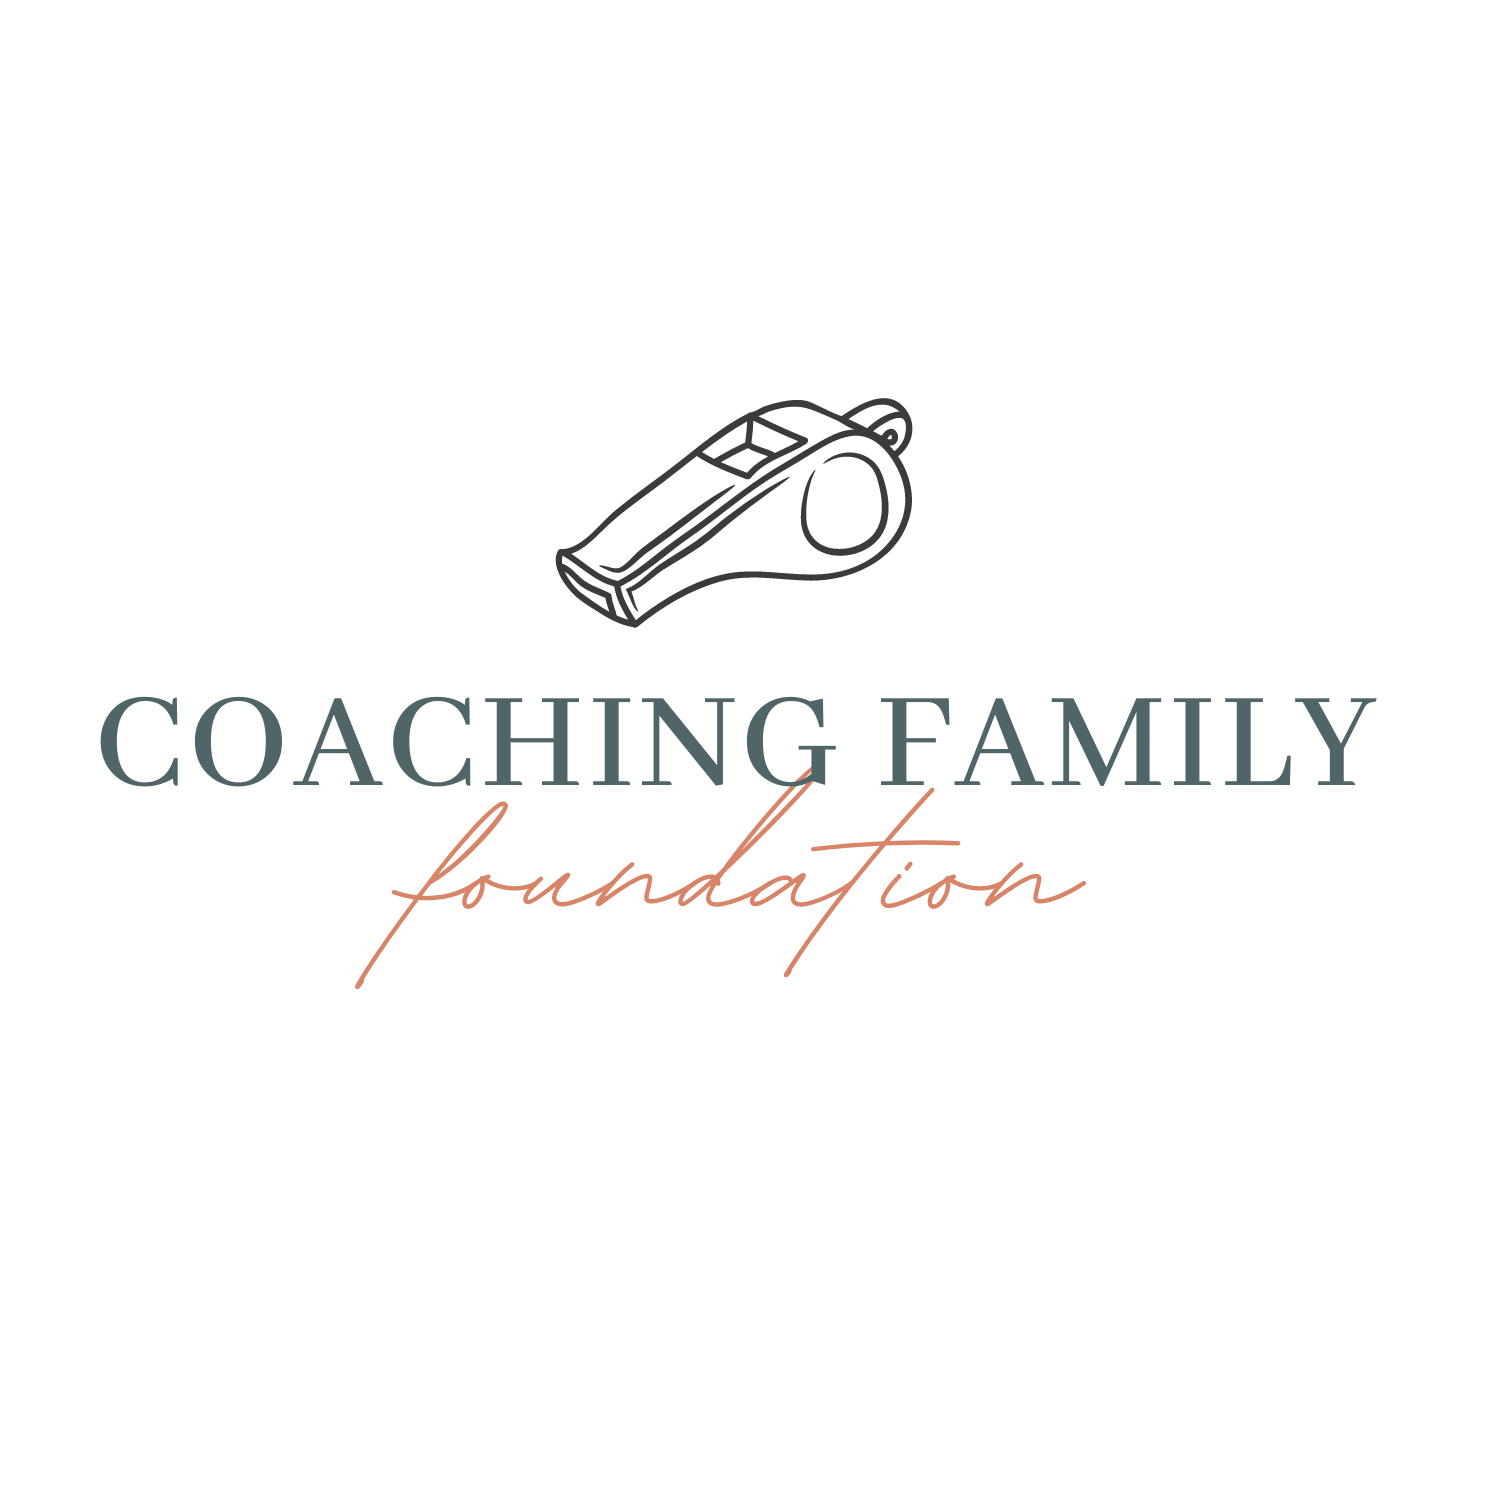 Coaching Family Foundation